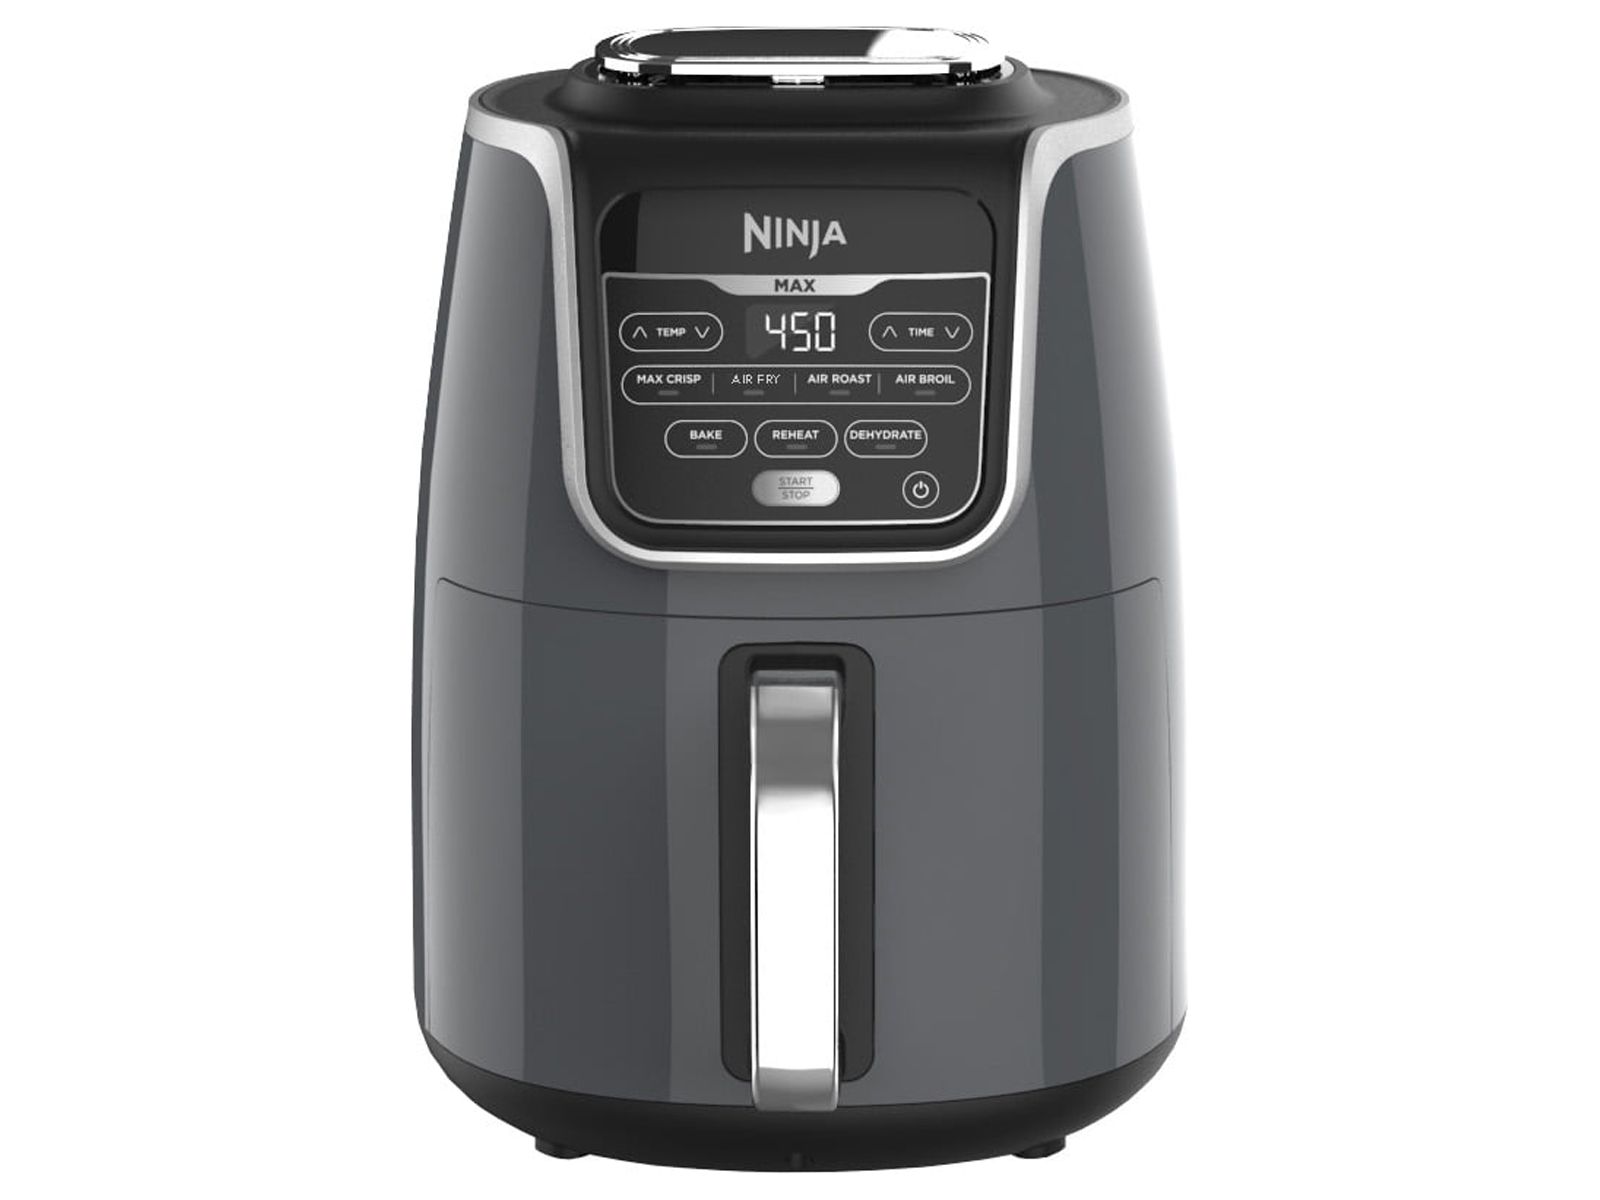 Ninja 5.5-Quart Air Fryer Max XL, AF161 in Black and Silver - image 6 of 11